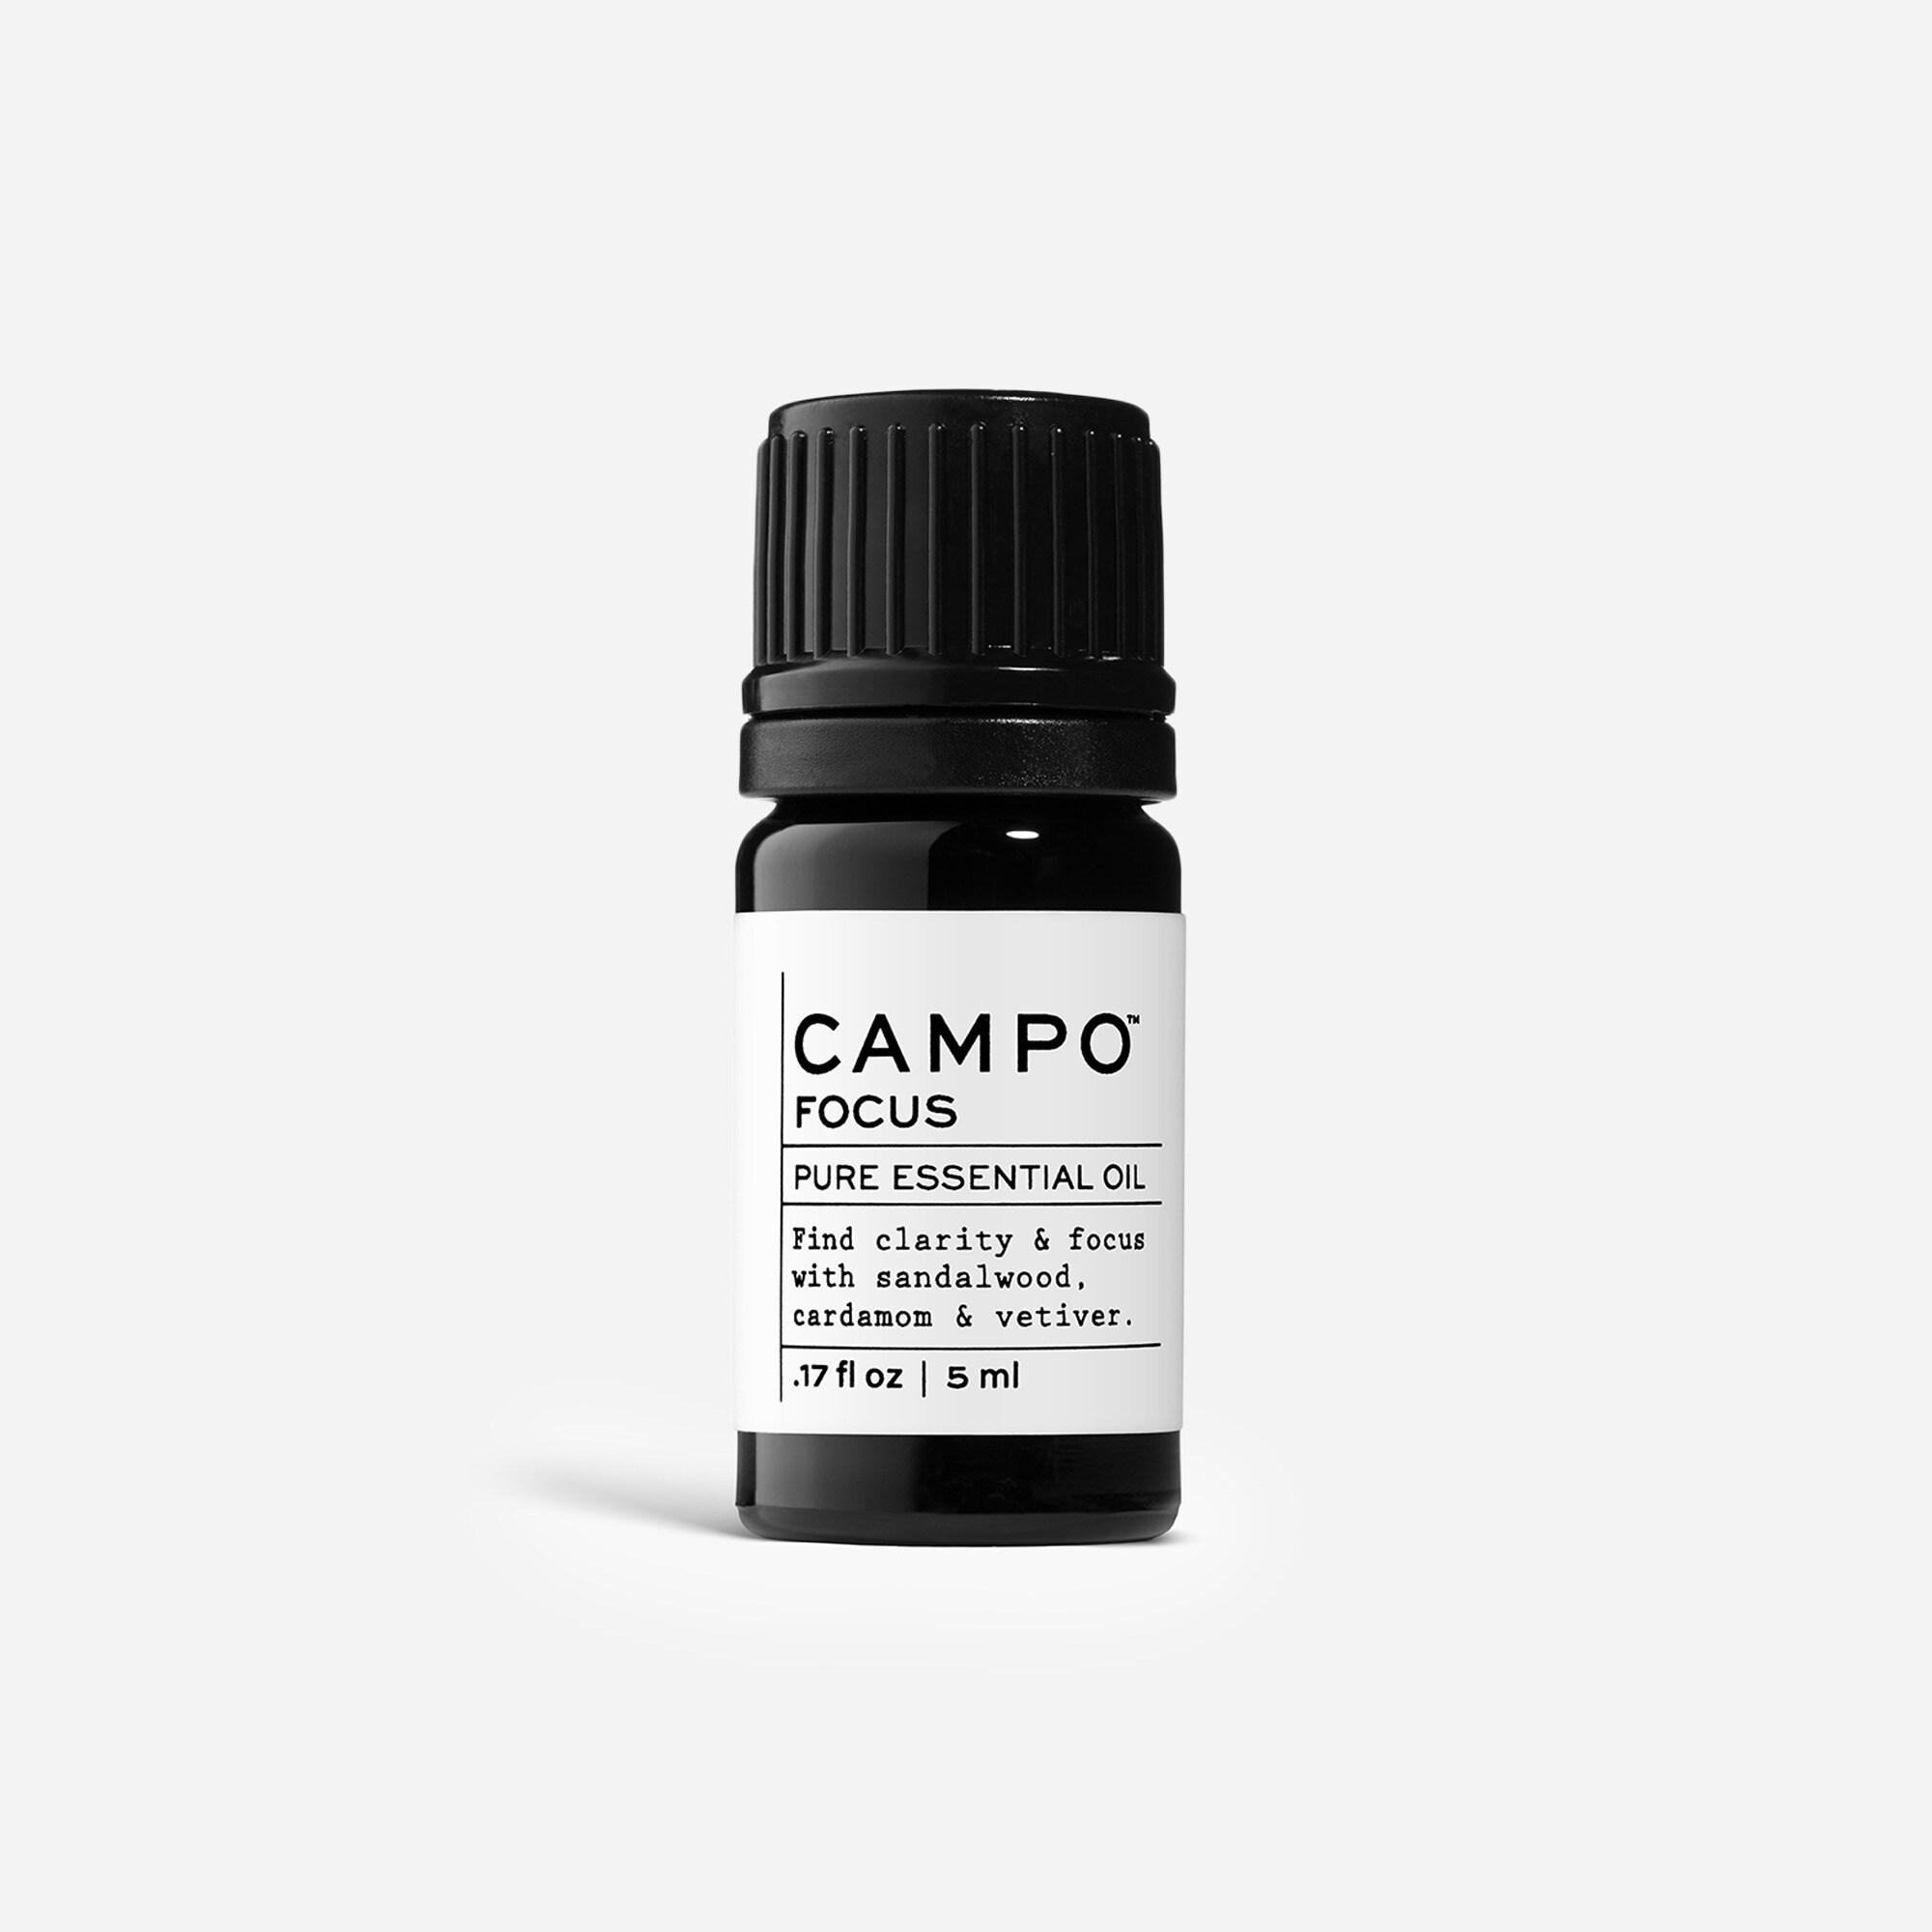  CAMPO® FOCUS pure essential oil blend